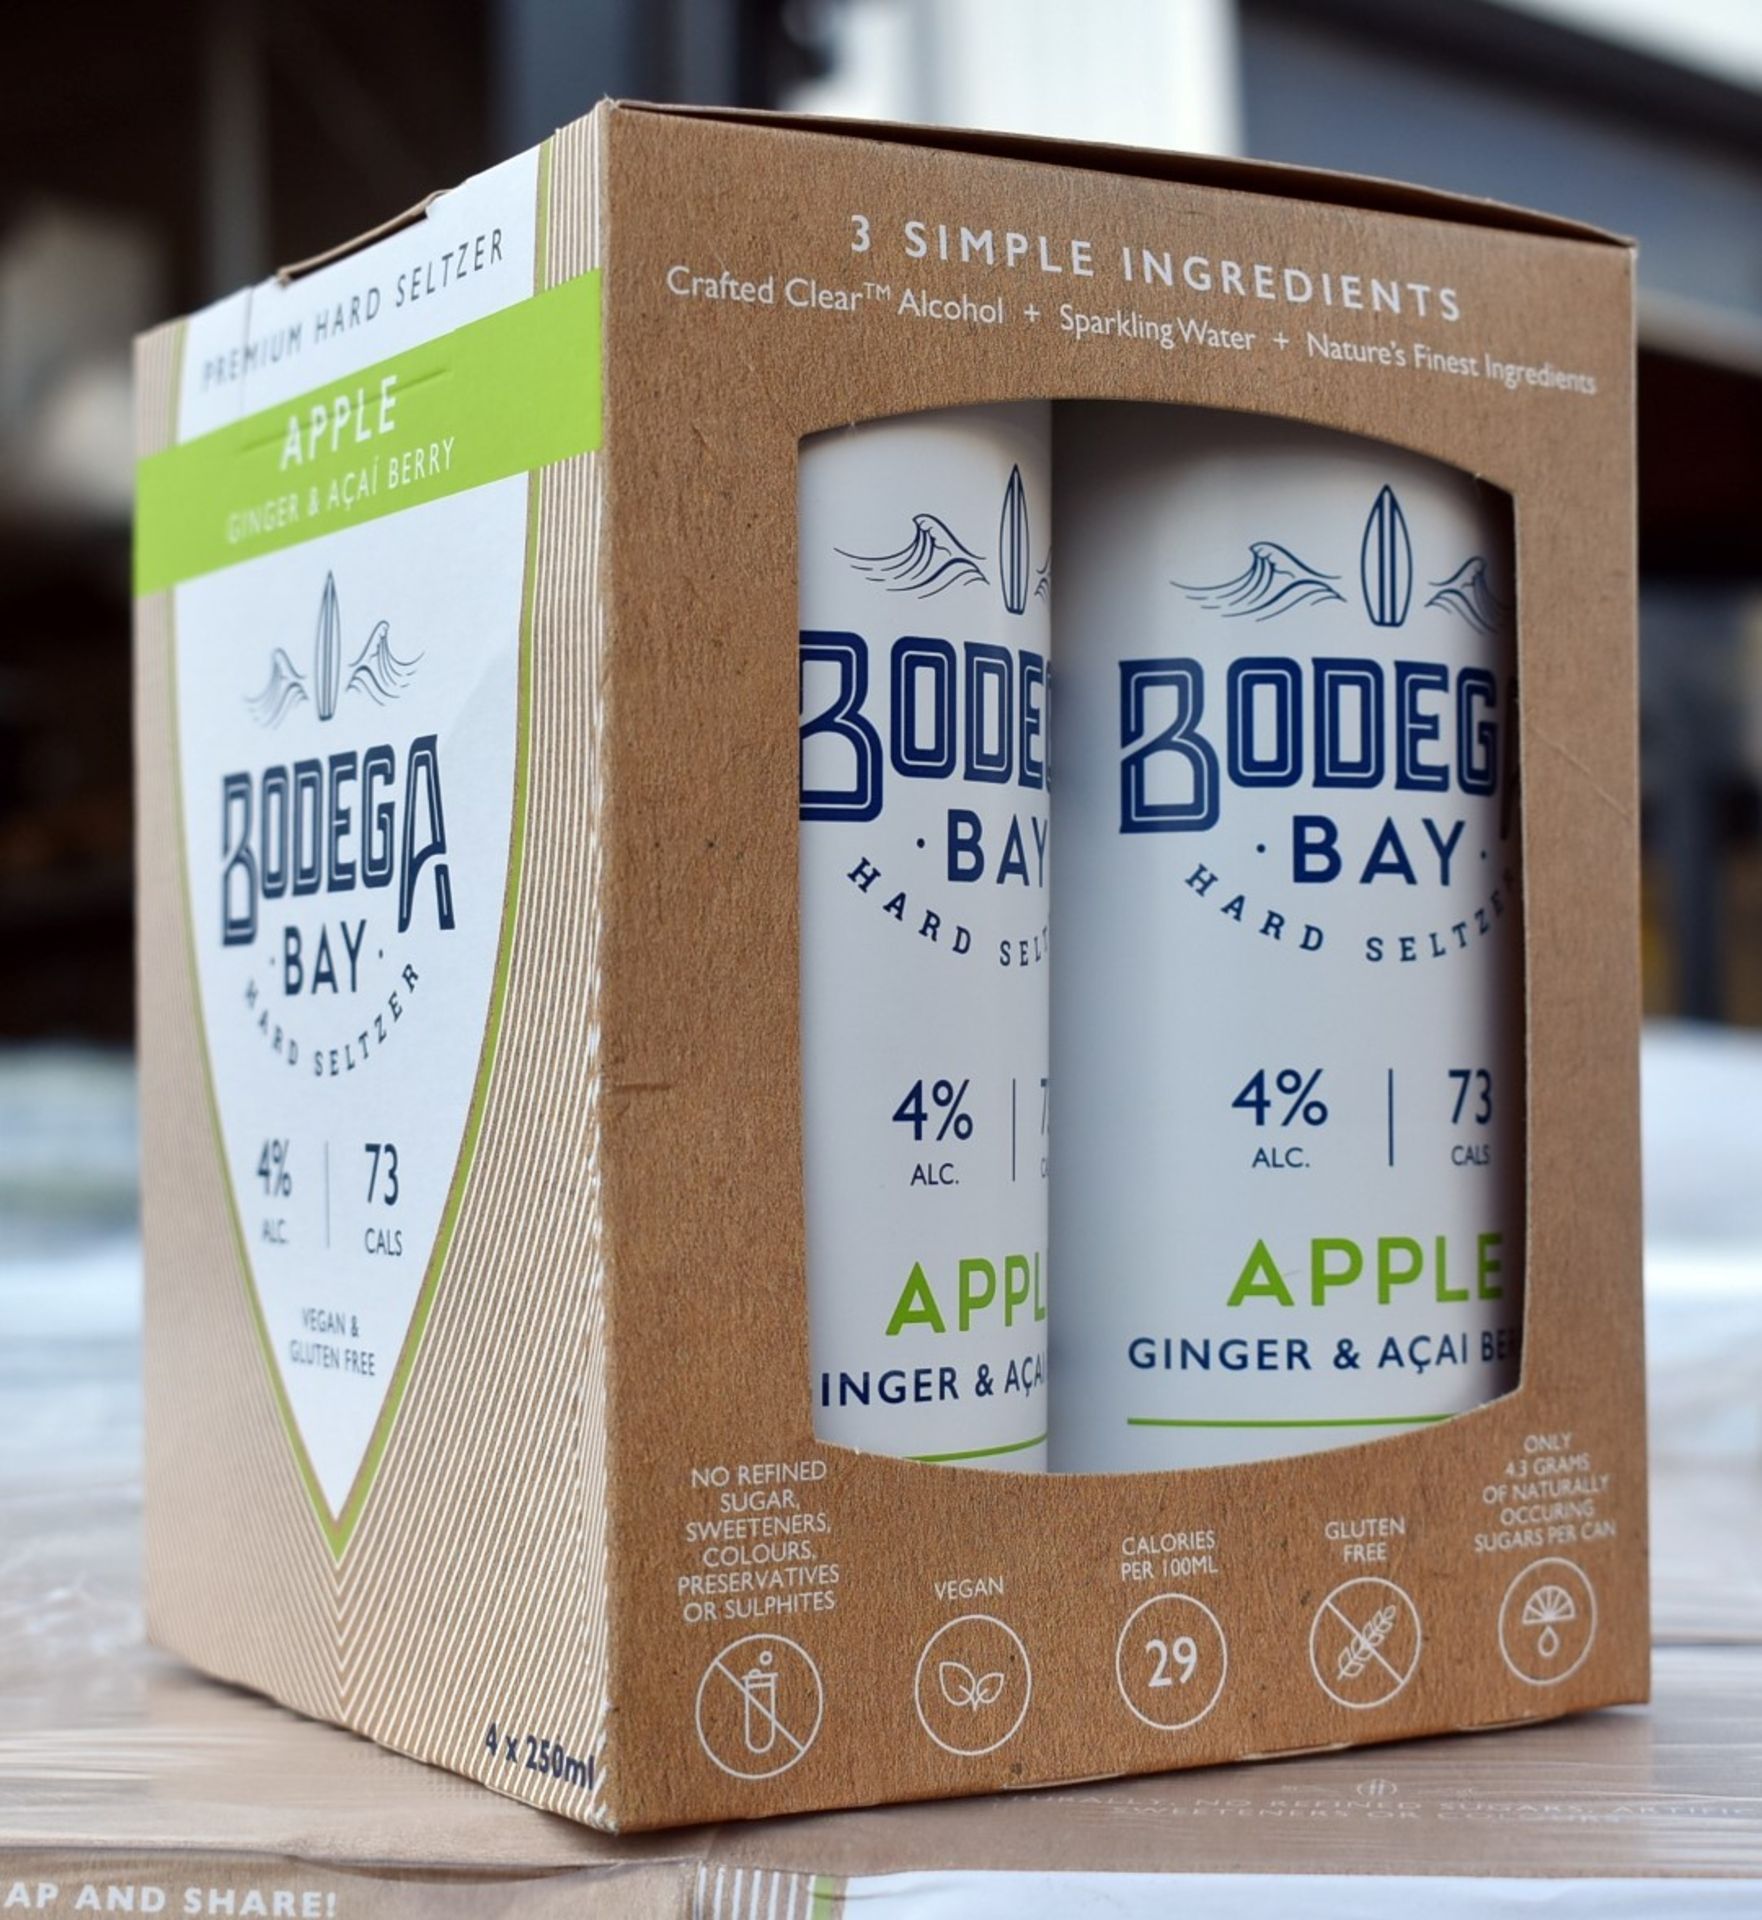 24 x Bodega Bay Hard Seltzer 250ml Alcoholic Sparkling Water Drinks - Apple Ginger & Acai Berry - Image 8 of 11